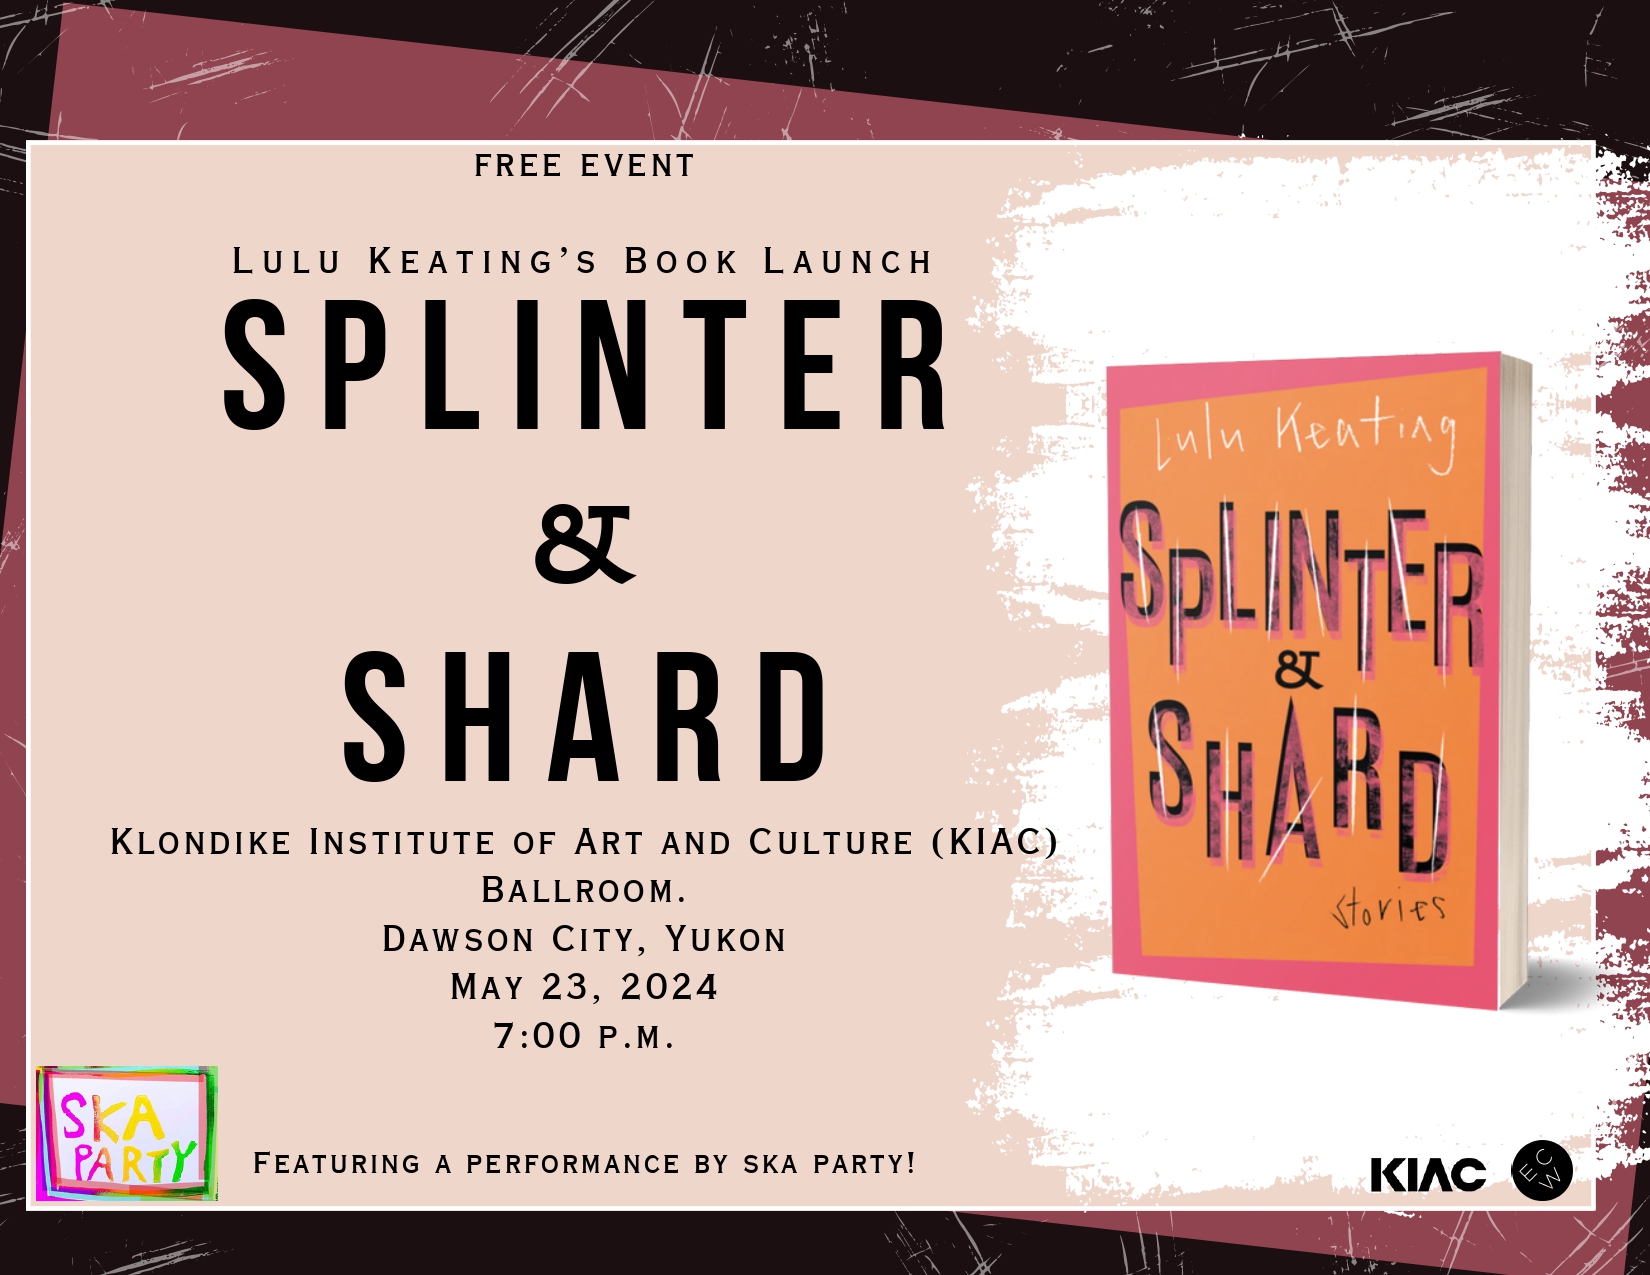 Poster for Lulu Keating's Book Launch for "Splinter & Shard"